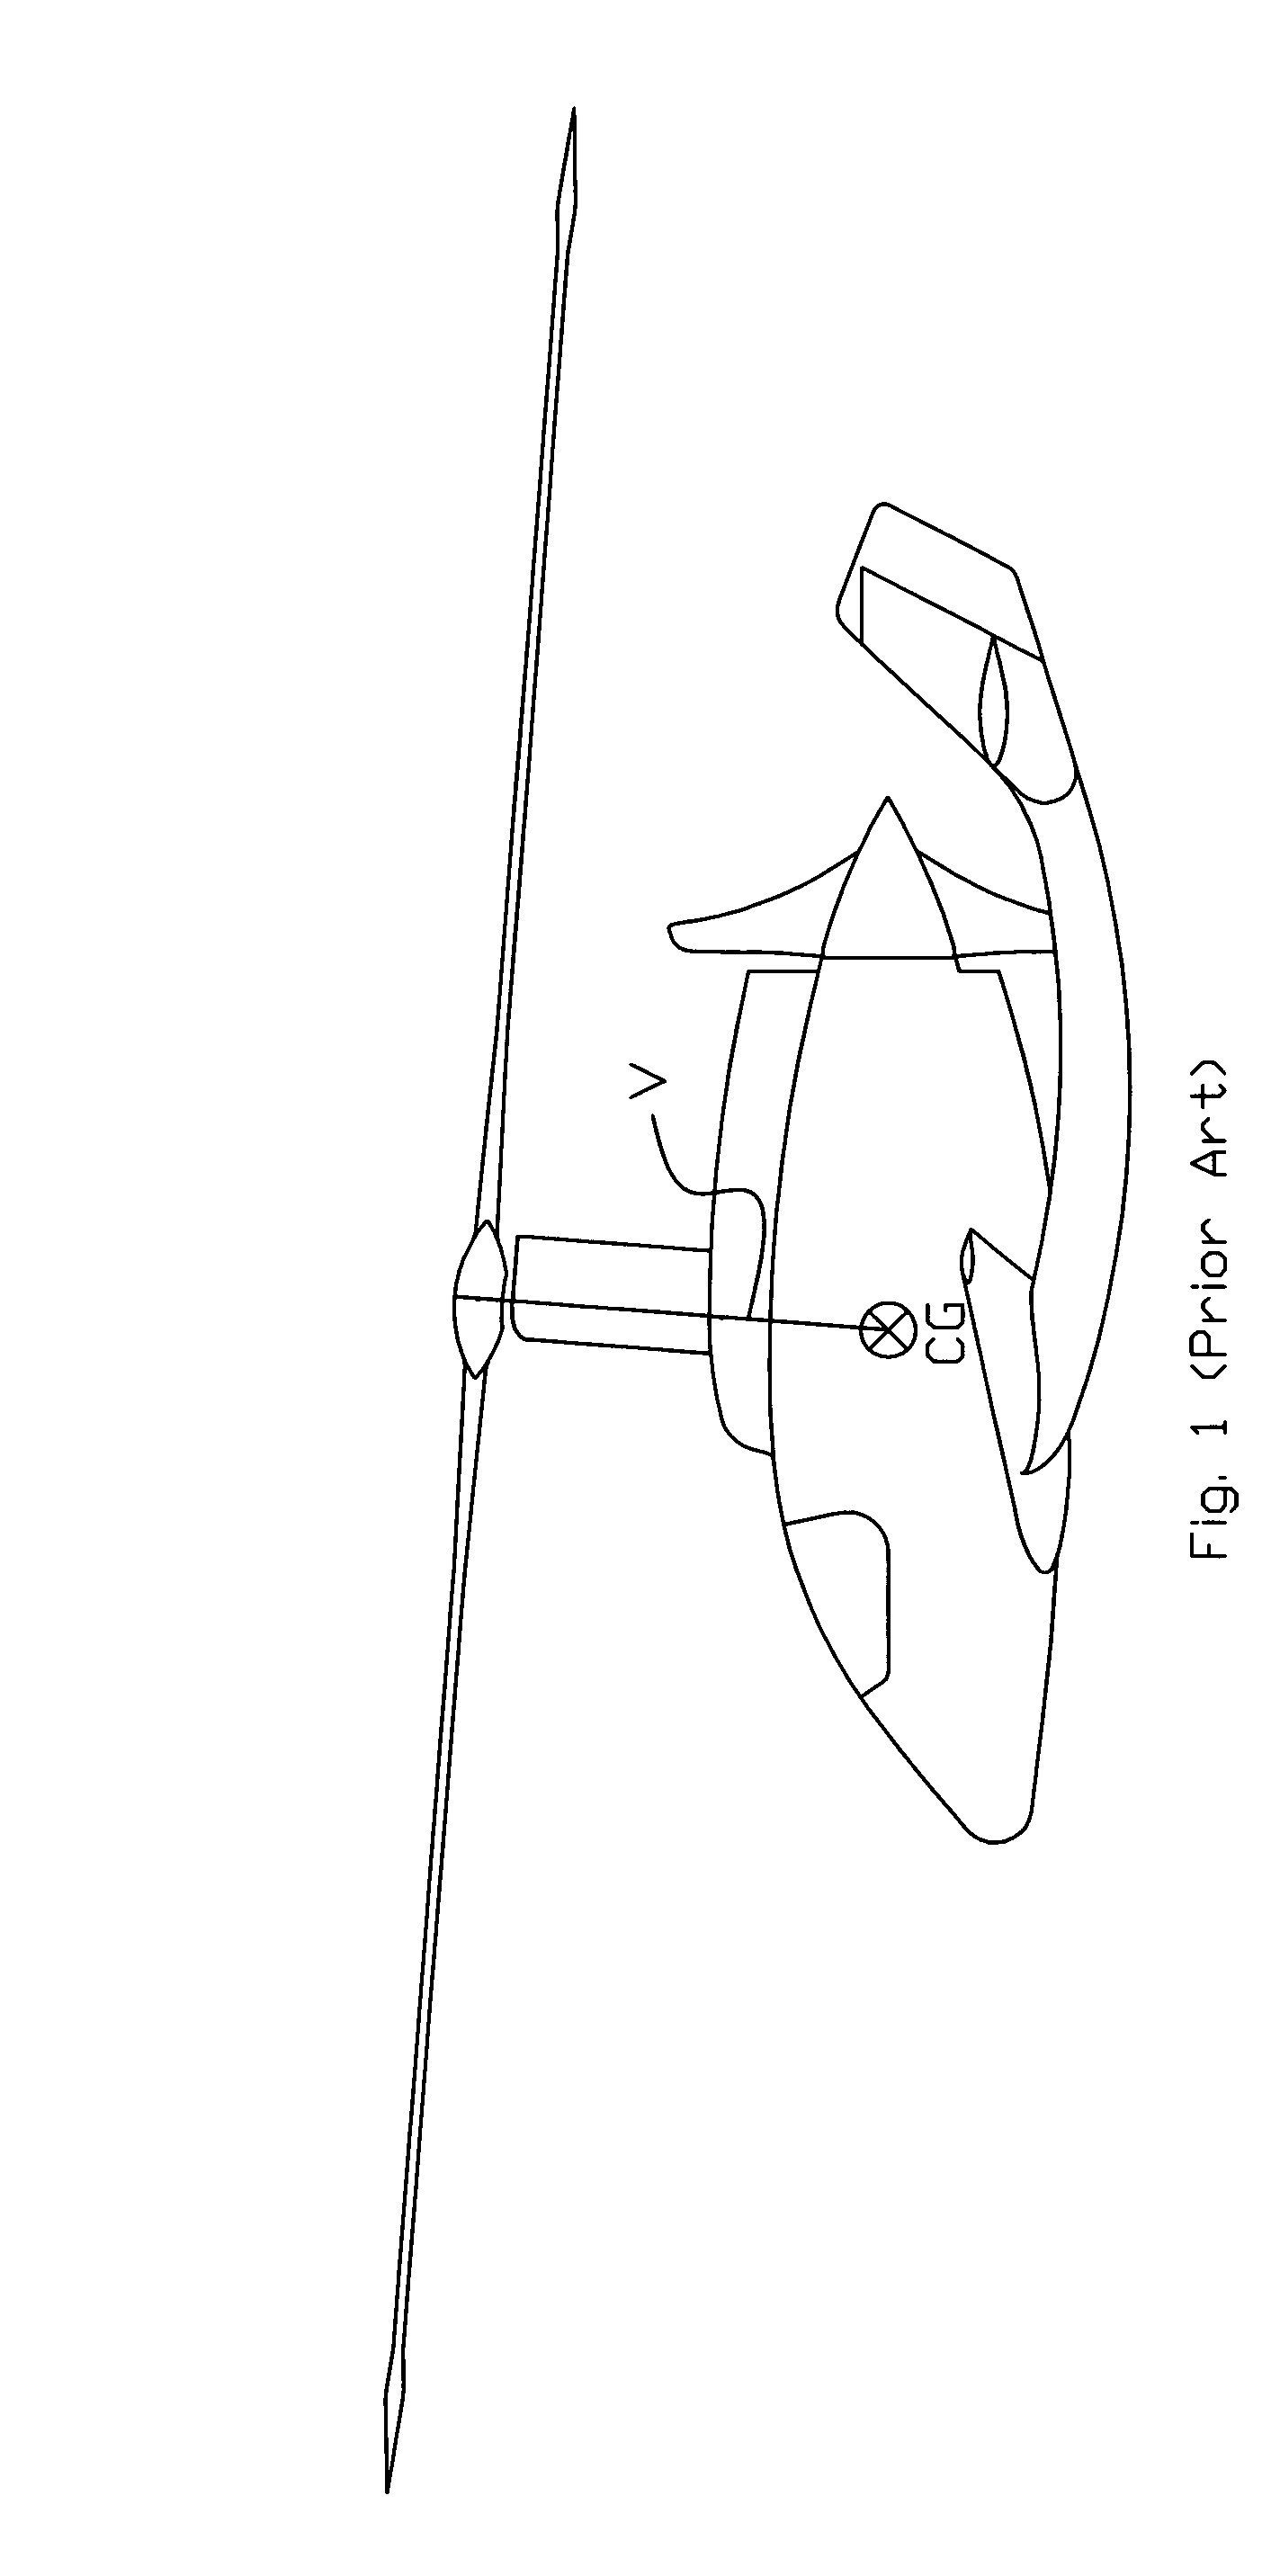 Tilting mast in a rotorcraft